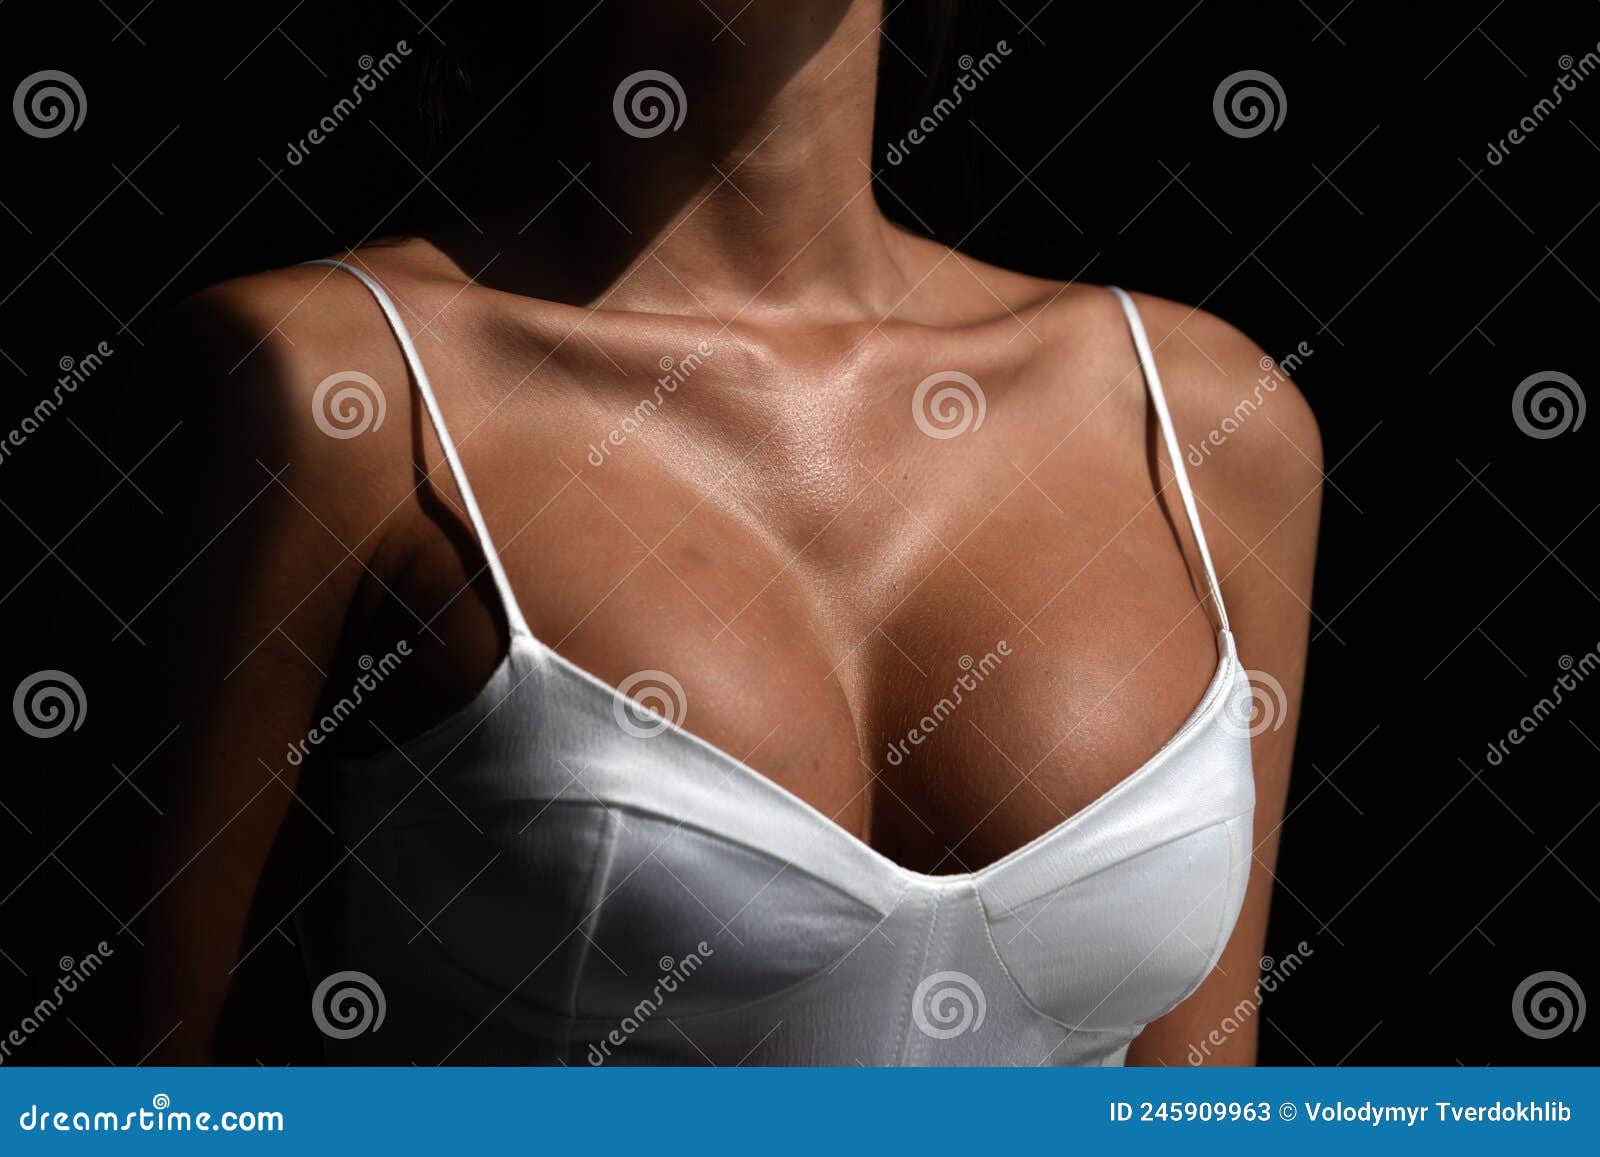 жен грудь для муж фото 25